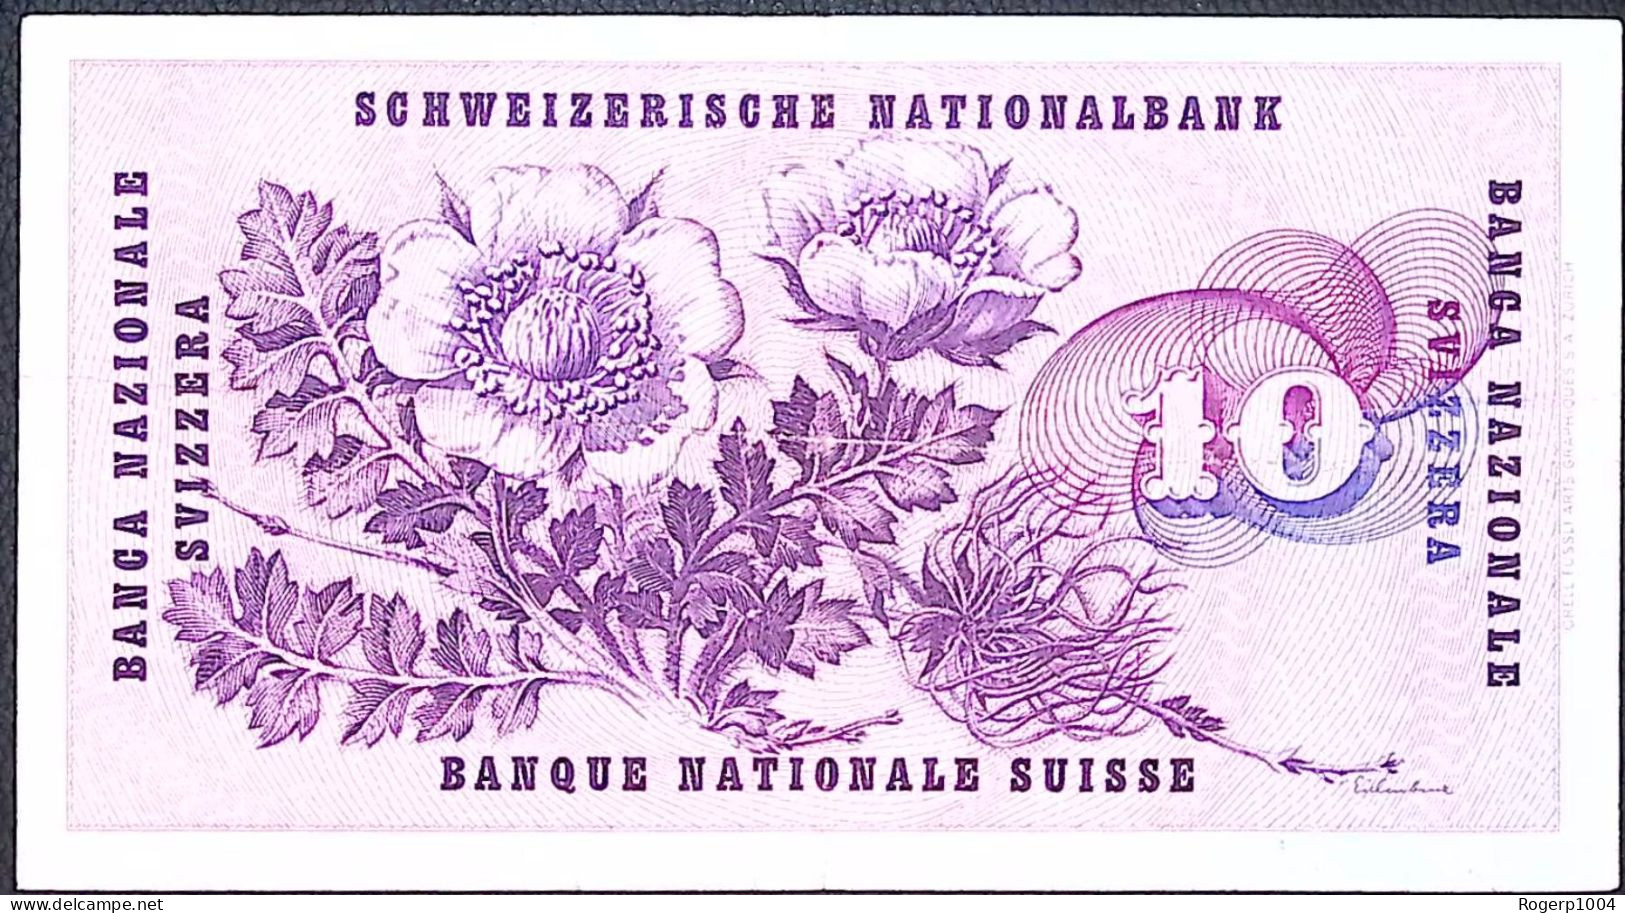 SUISSE/SWITZERLAND * 10 Francs * G. Keller * 15/05/1968 * Etat/Grade TTB/VF - Schweiz